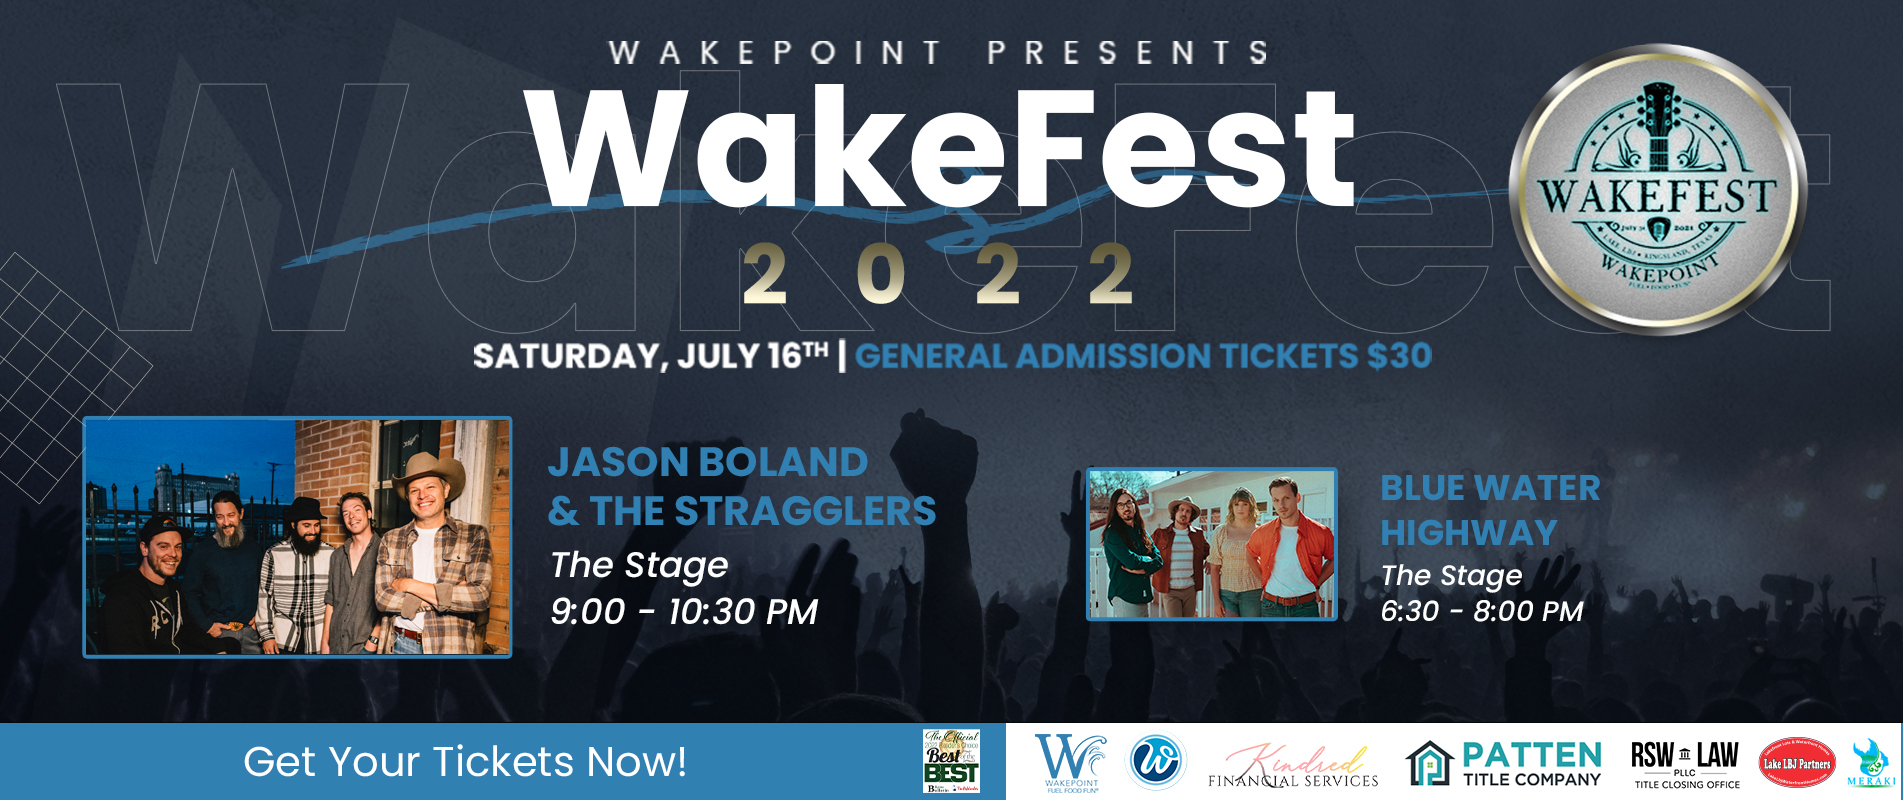 Wakefest 2022 Wakepoint